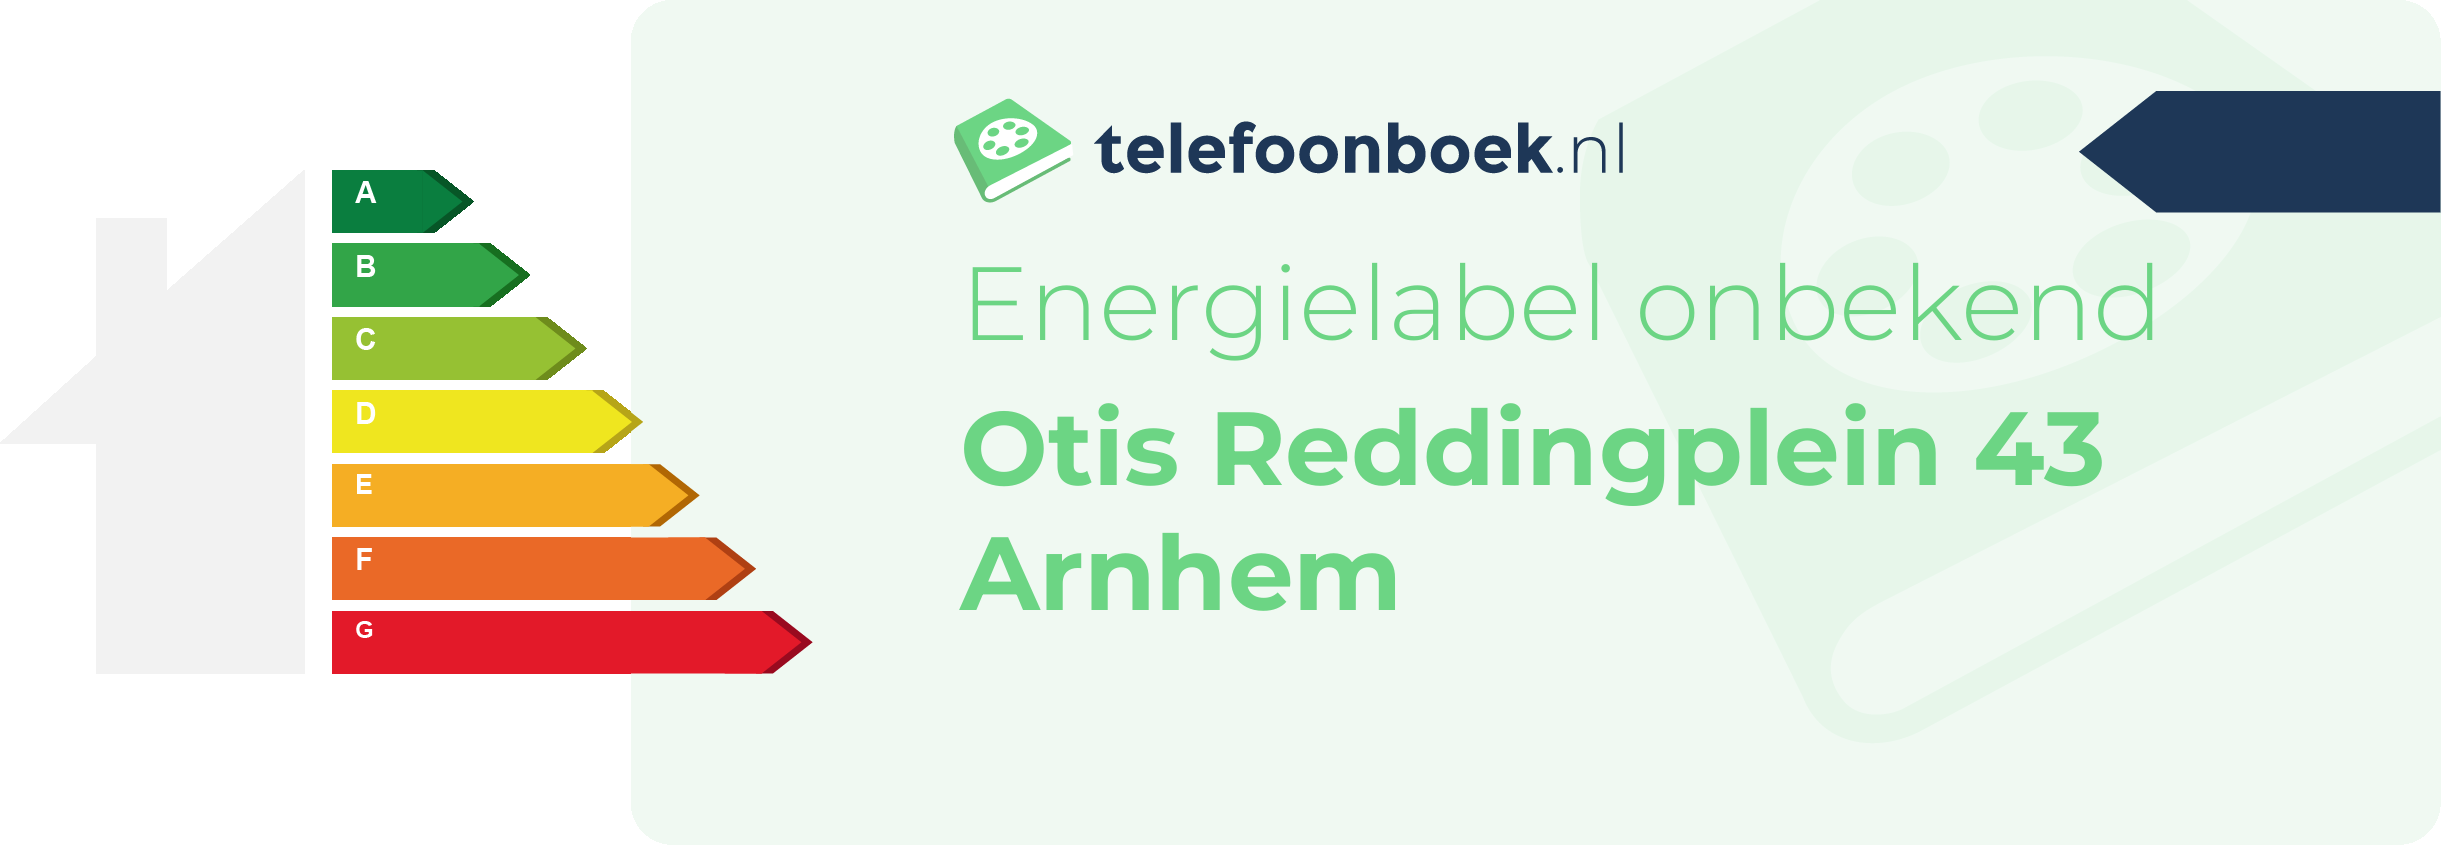 Energielabel Otis Reddingplein 43 Arnhem